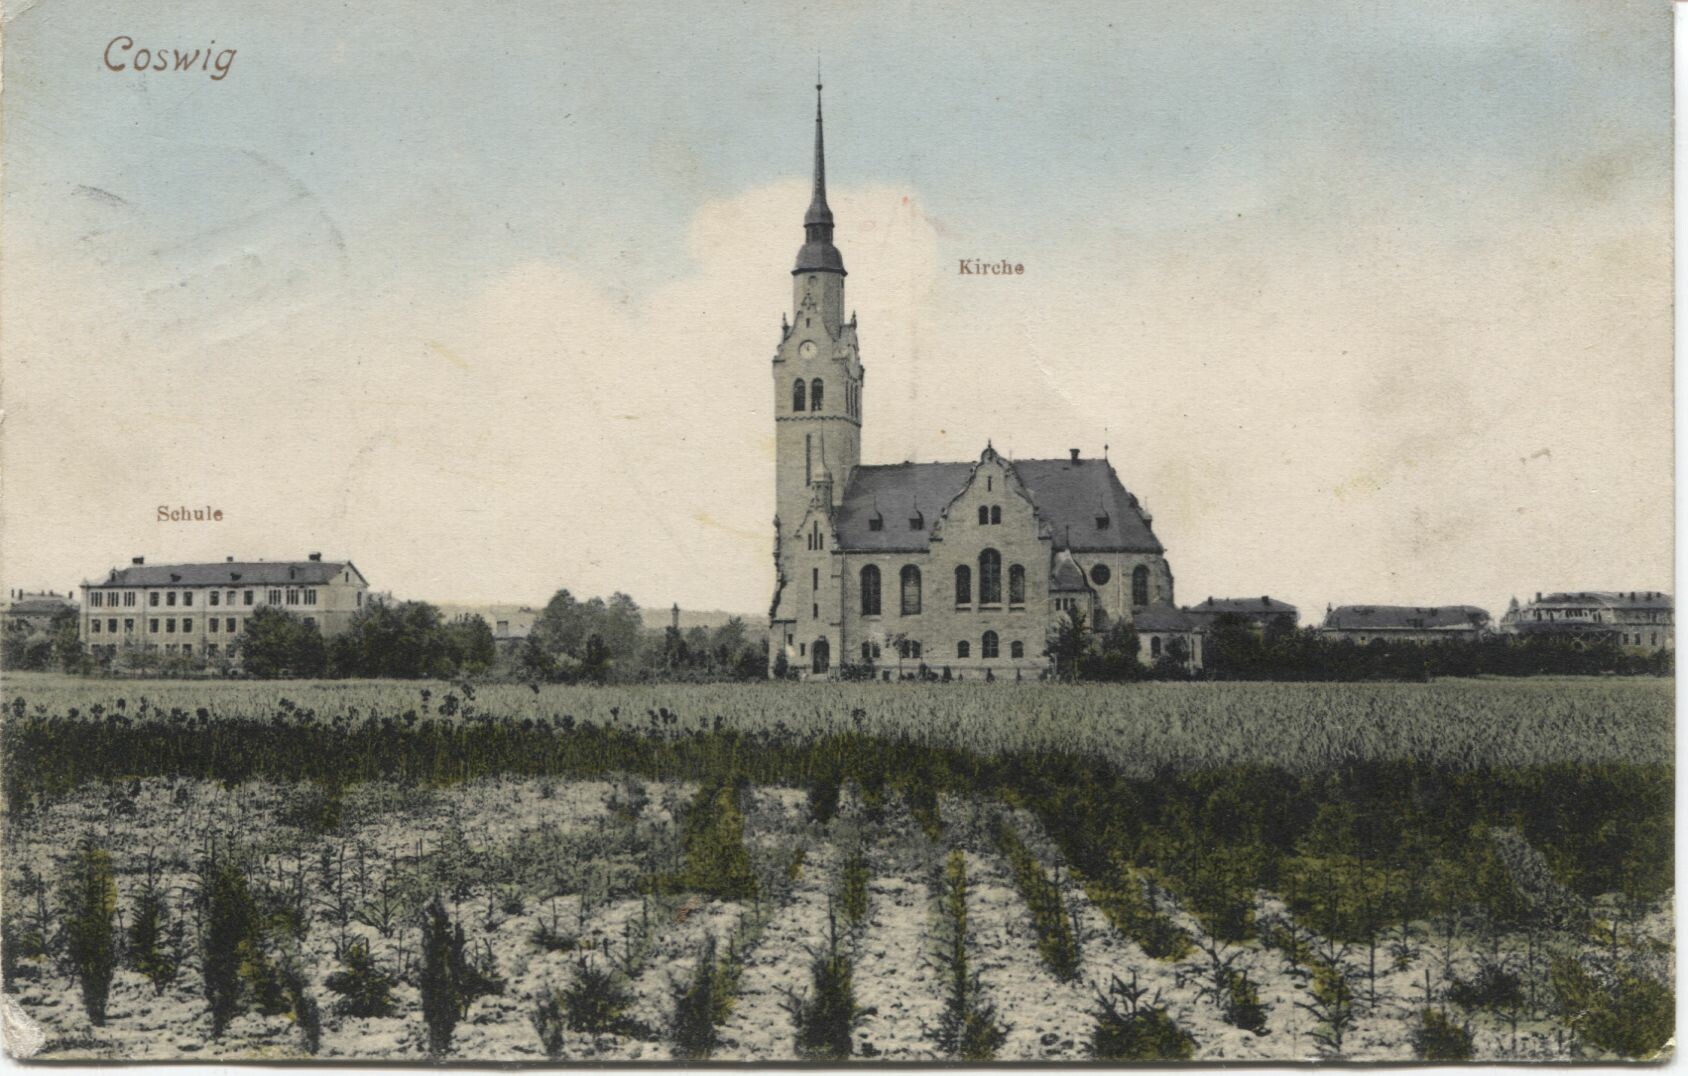 Postkarte: Coswig - Kirchen- Neue Kirche (Karrasburg Museum Coswig CC BY-NC-SA)